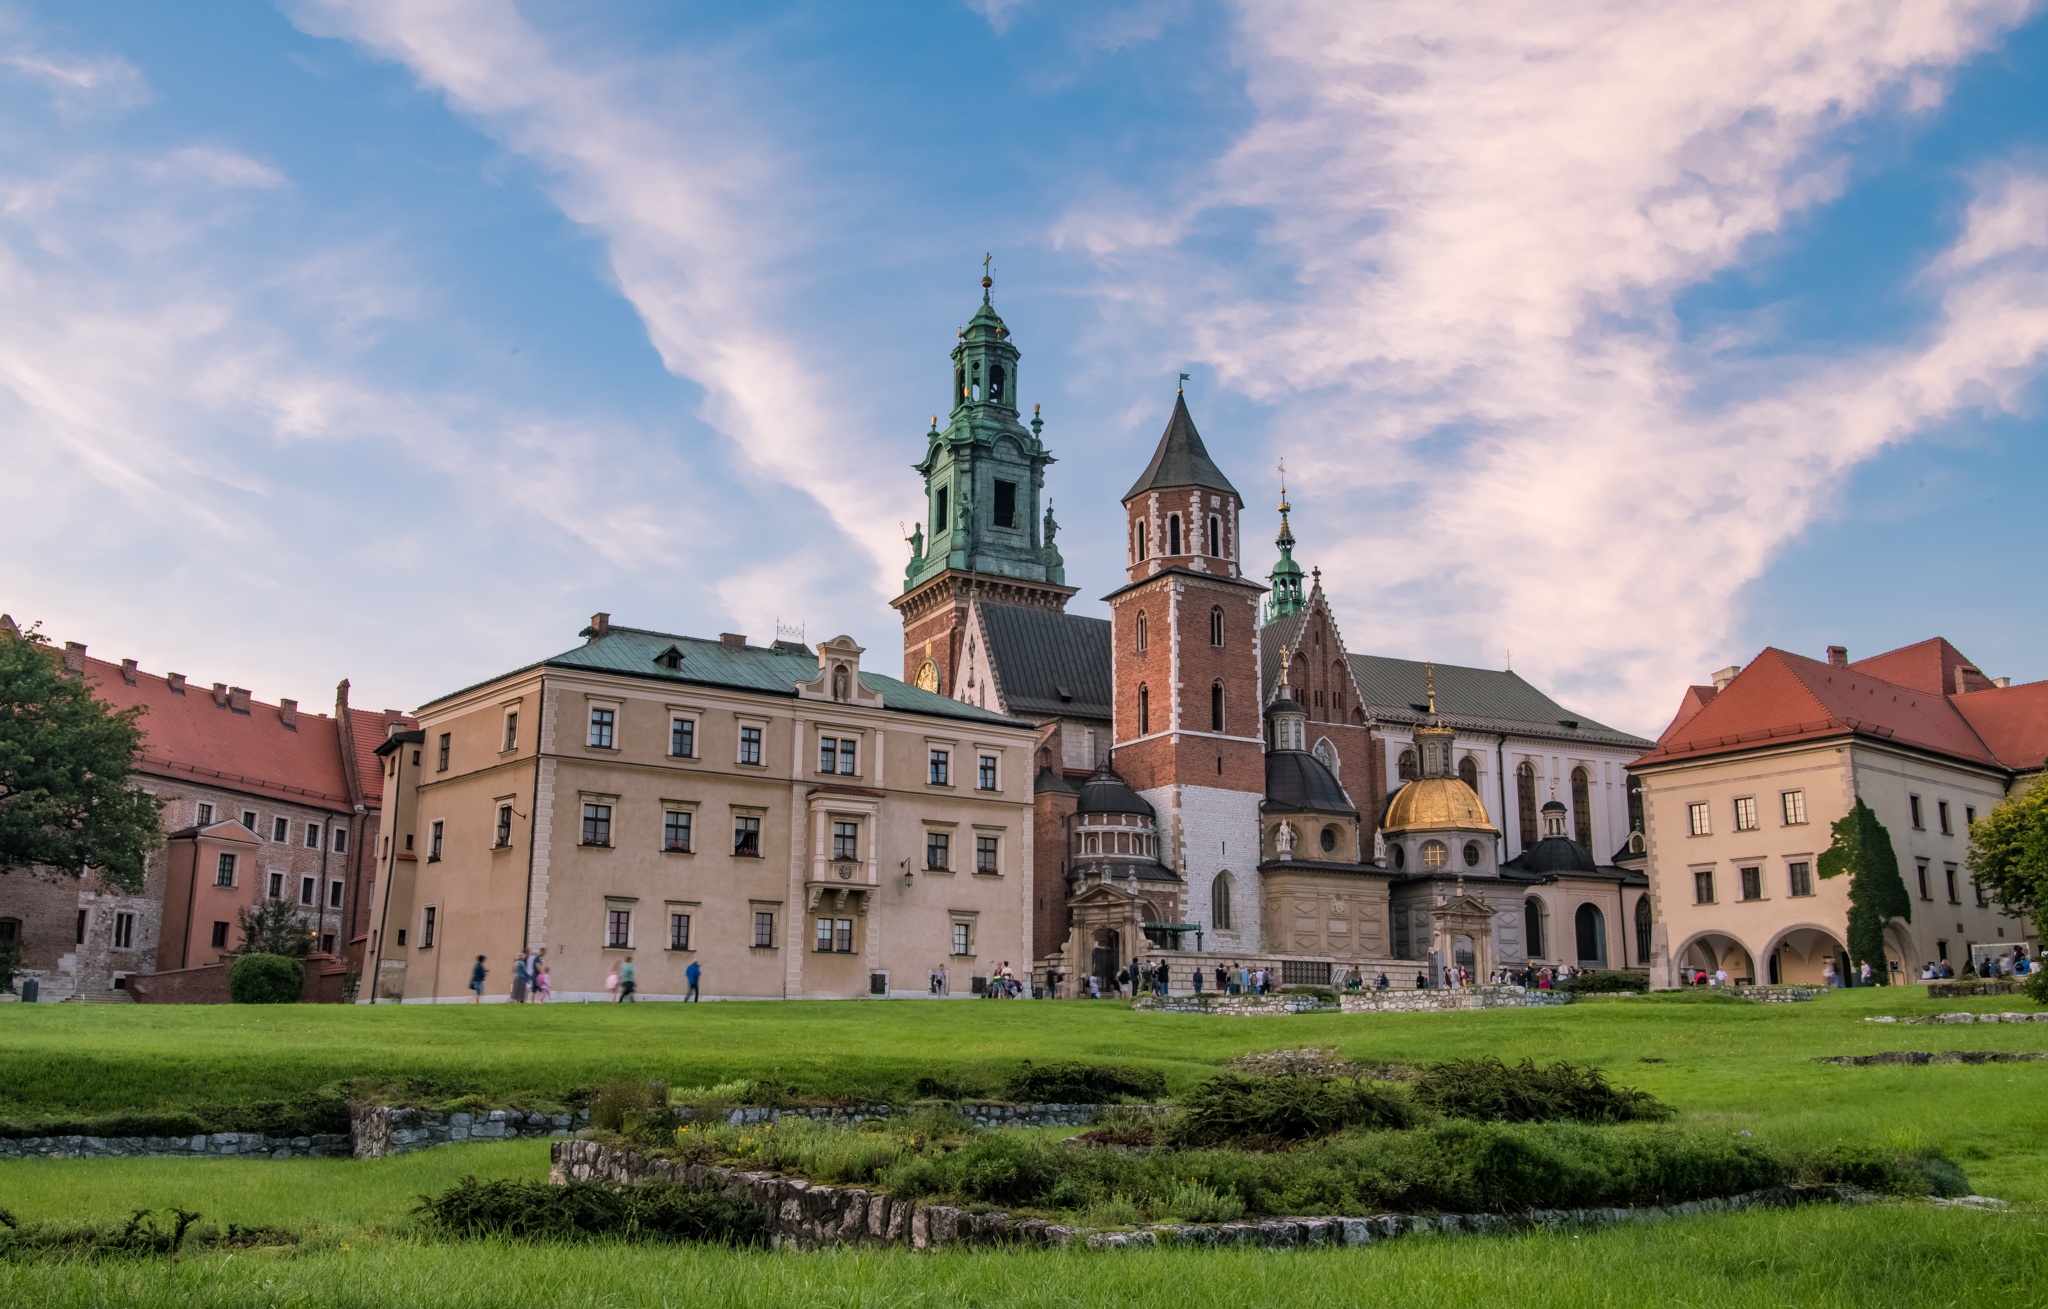 Visit Krakow, Poland - A Walk Through History